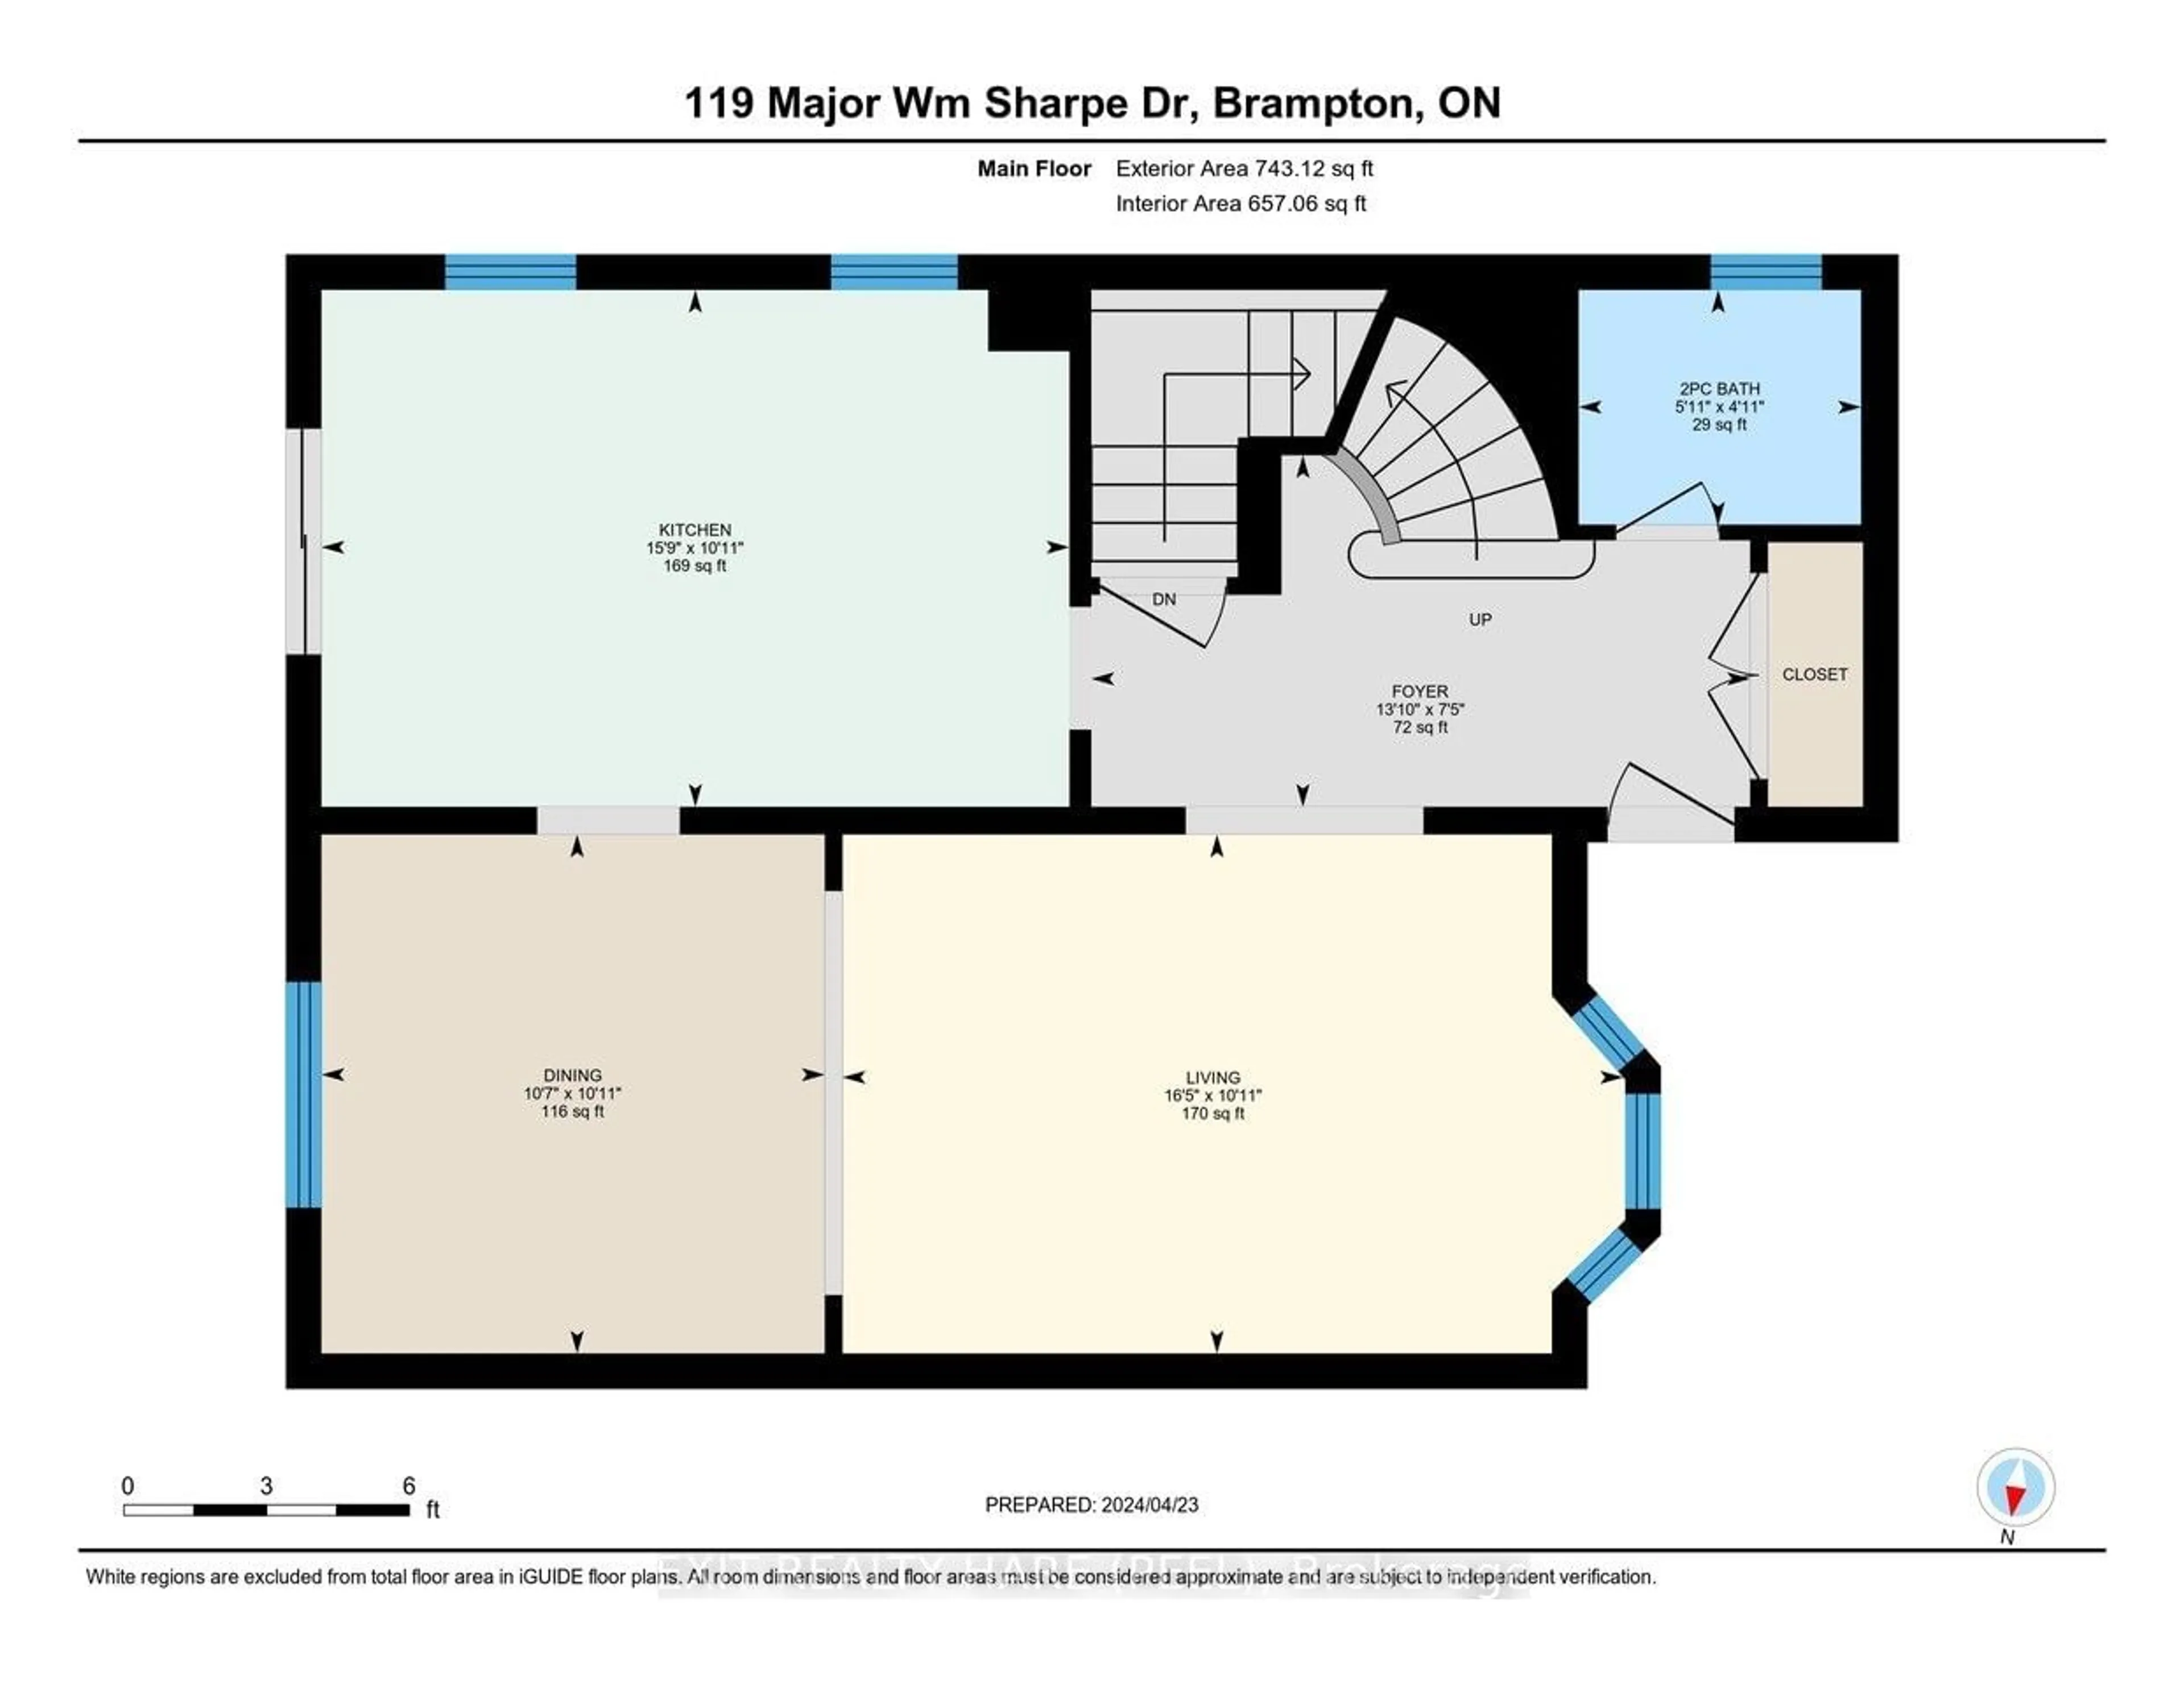 Floor plan for 119 Major Wm. Sharpe Dr, Brampton Ontario L6X 4A6